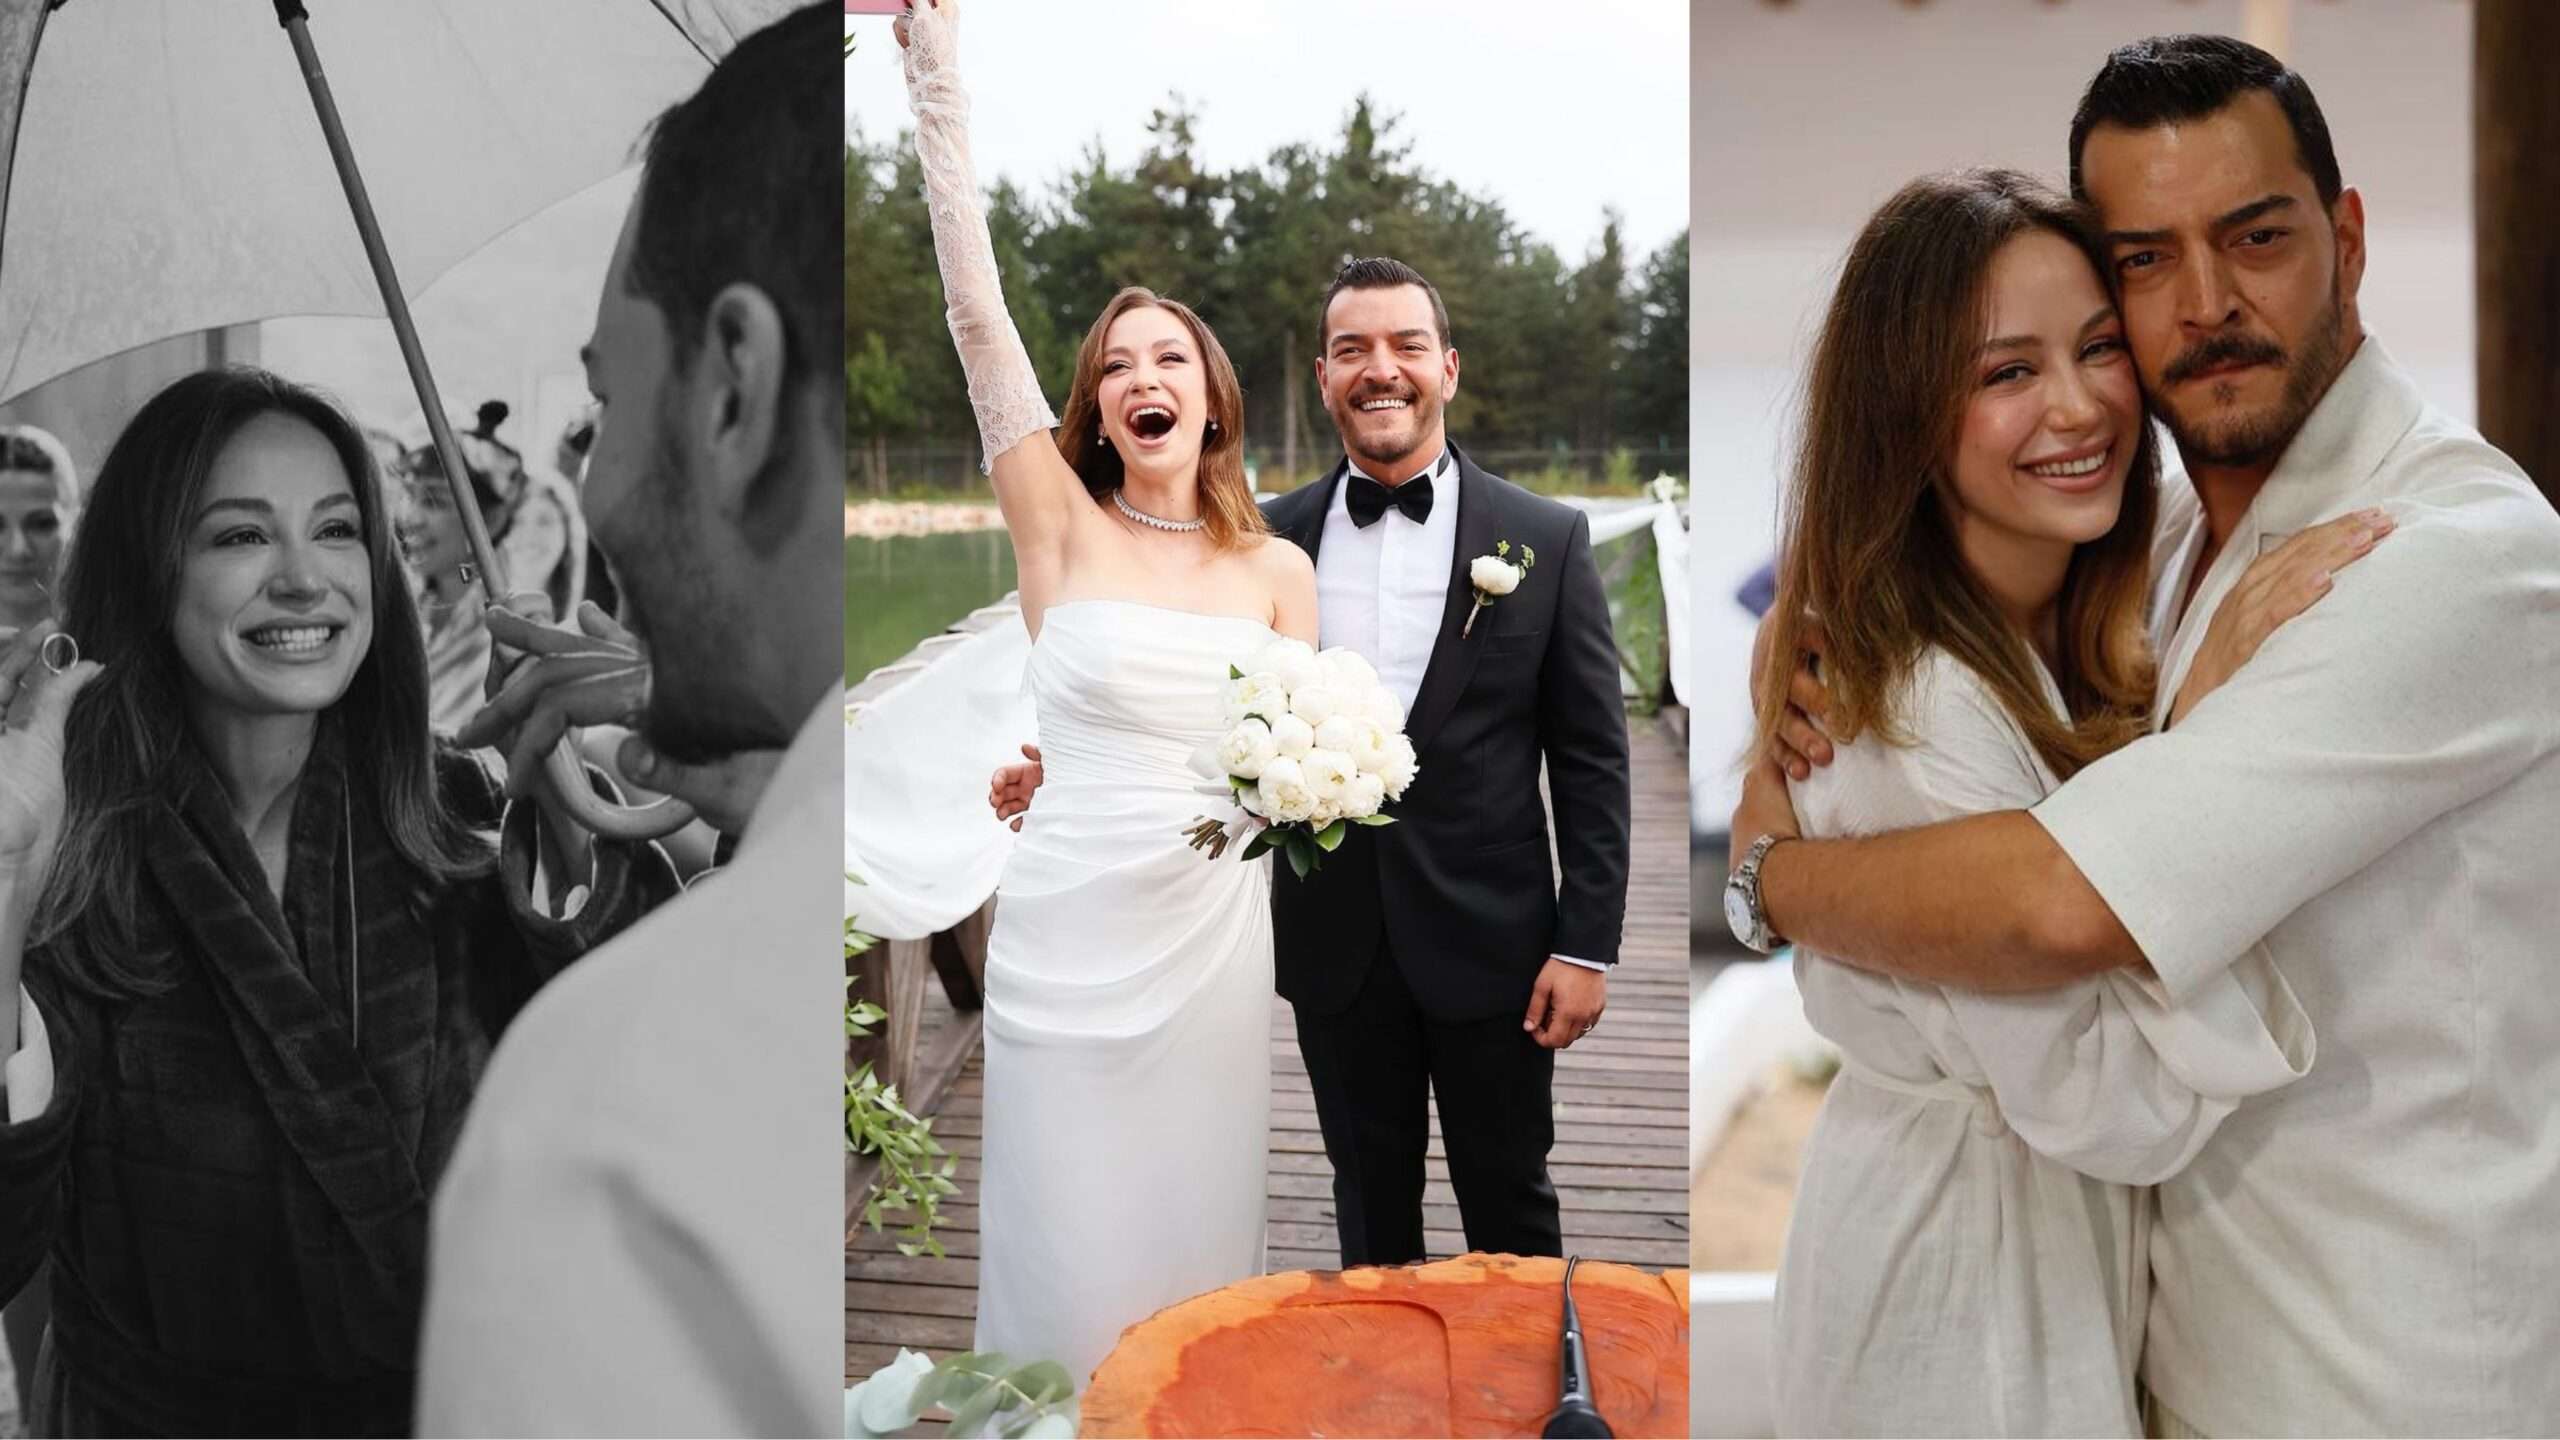 Çağrı Şensoy Wedding is Trending all over the Internet